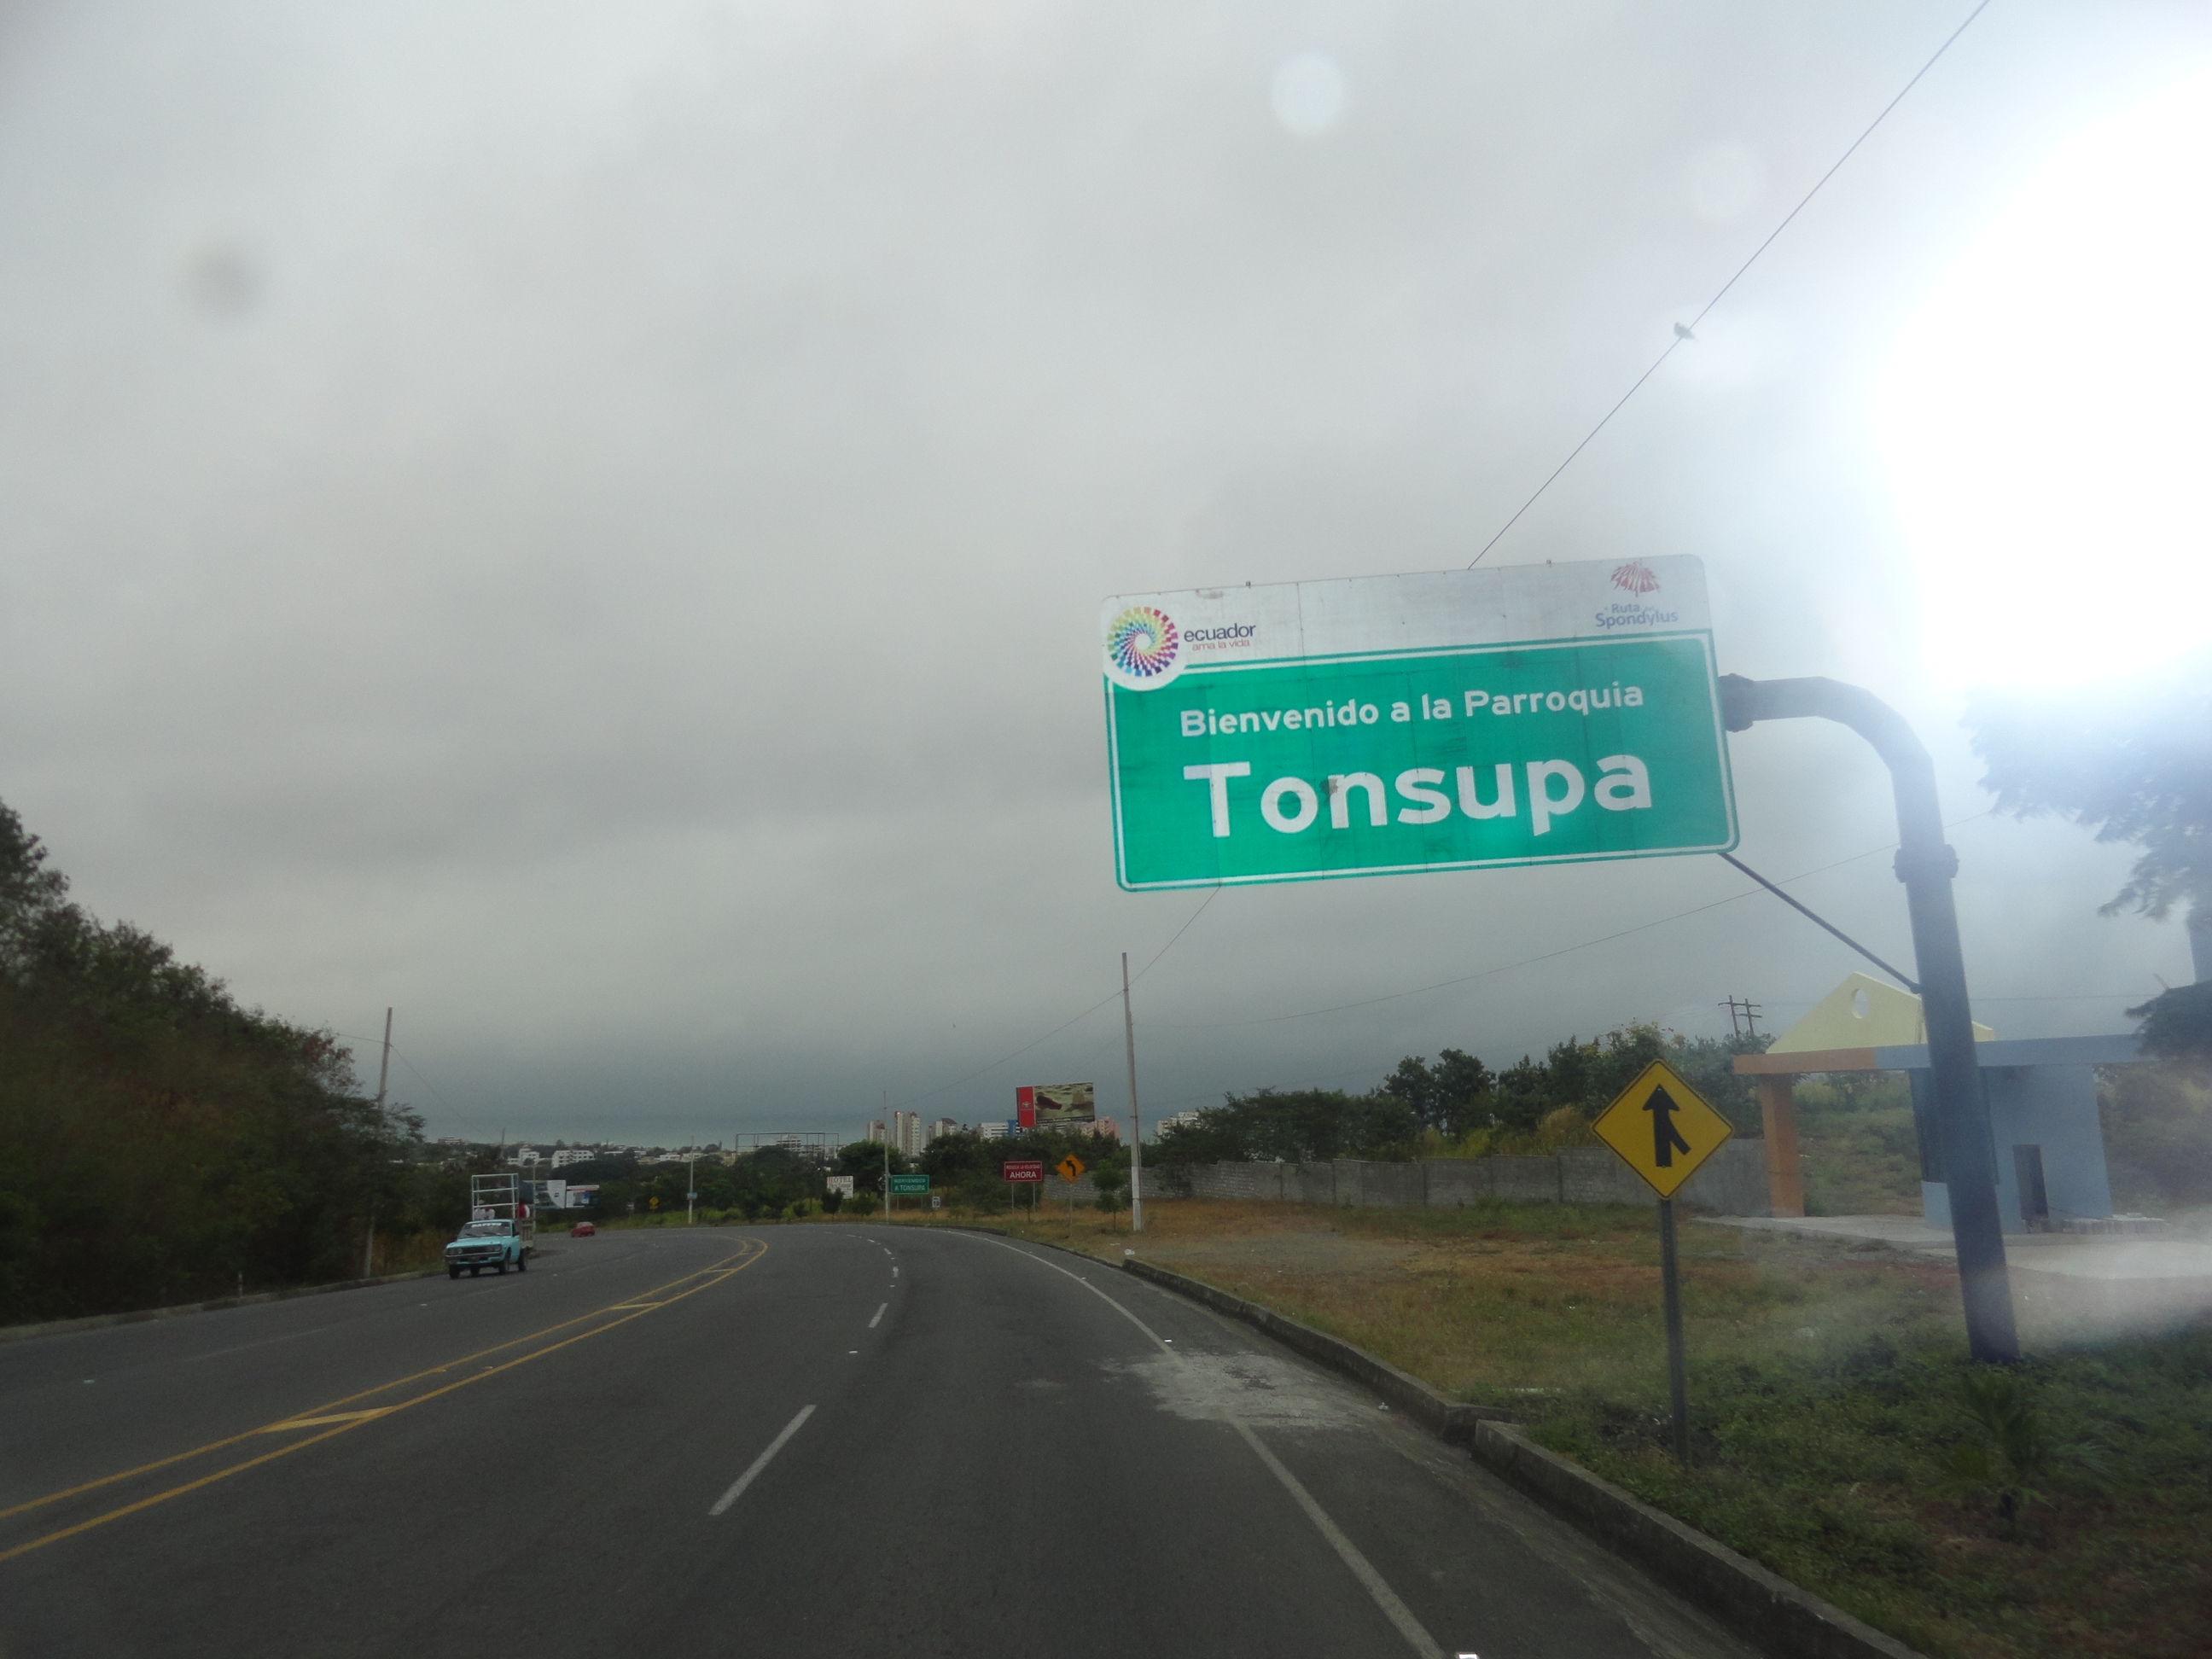 Foto: Valla publicitaria - Atacames- Tonsupa (Esmeraldas), Ecuador